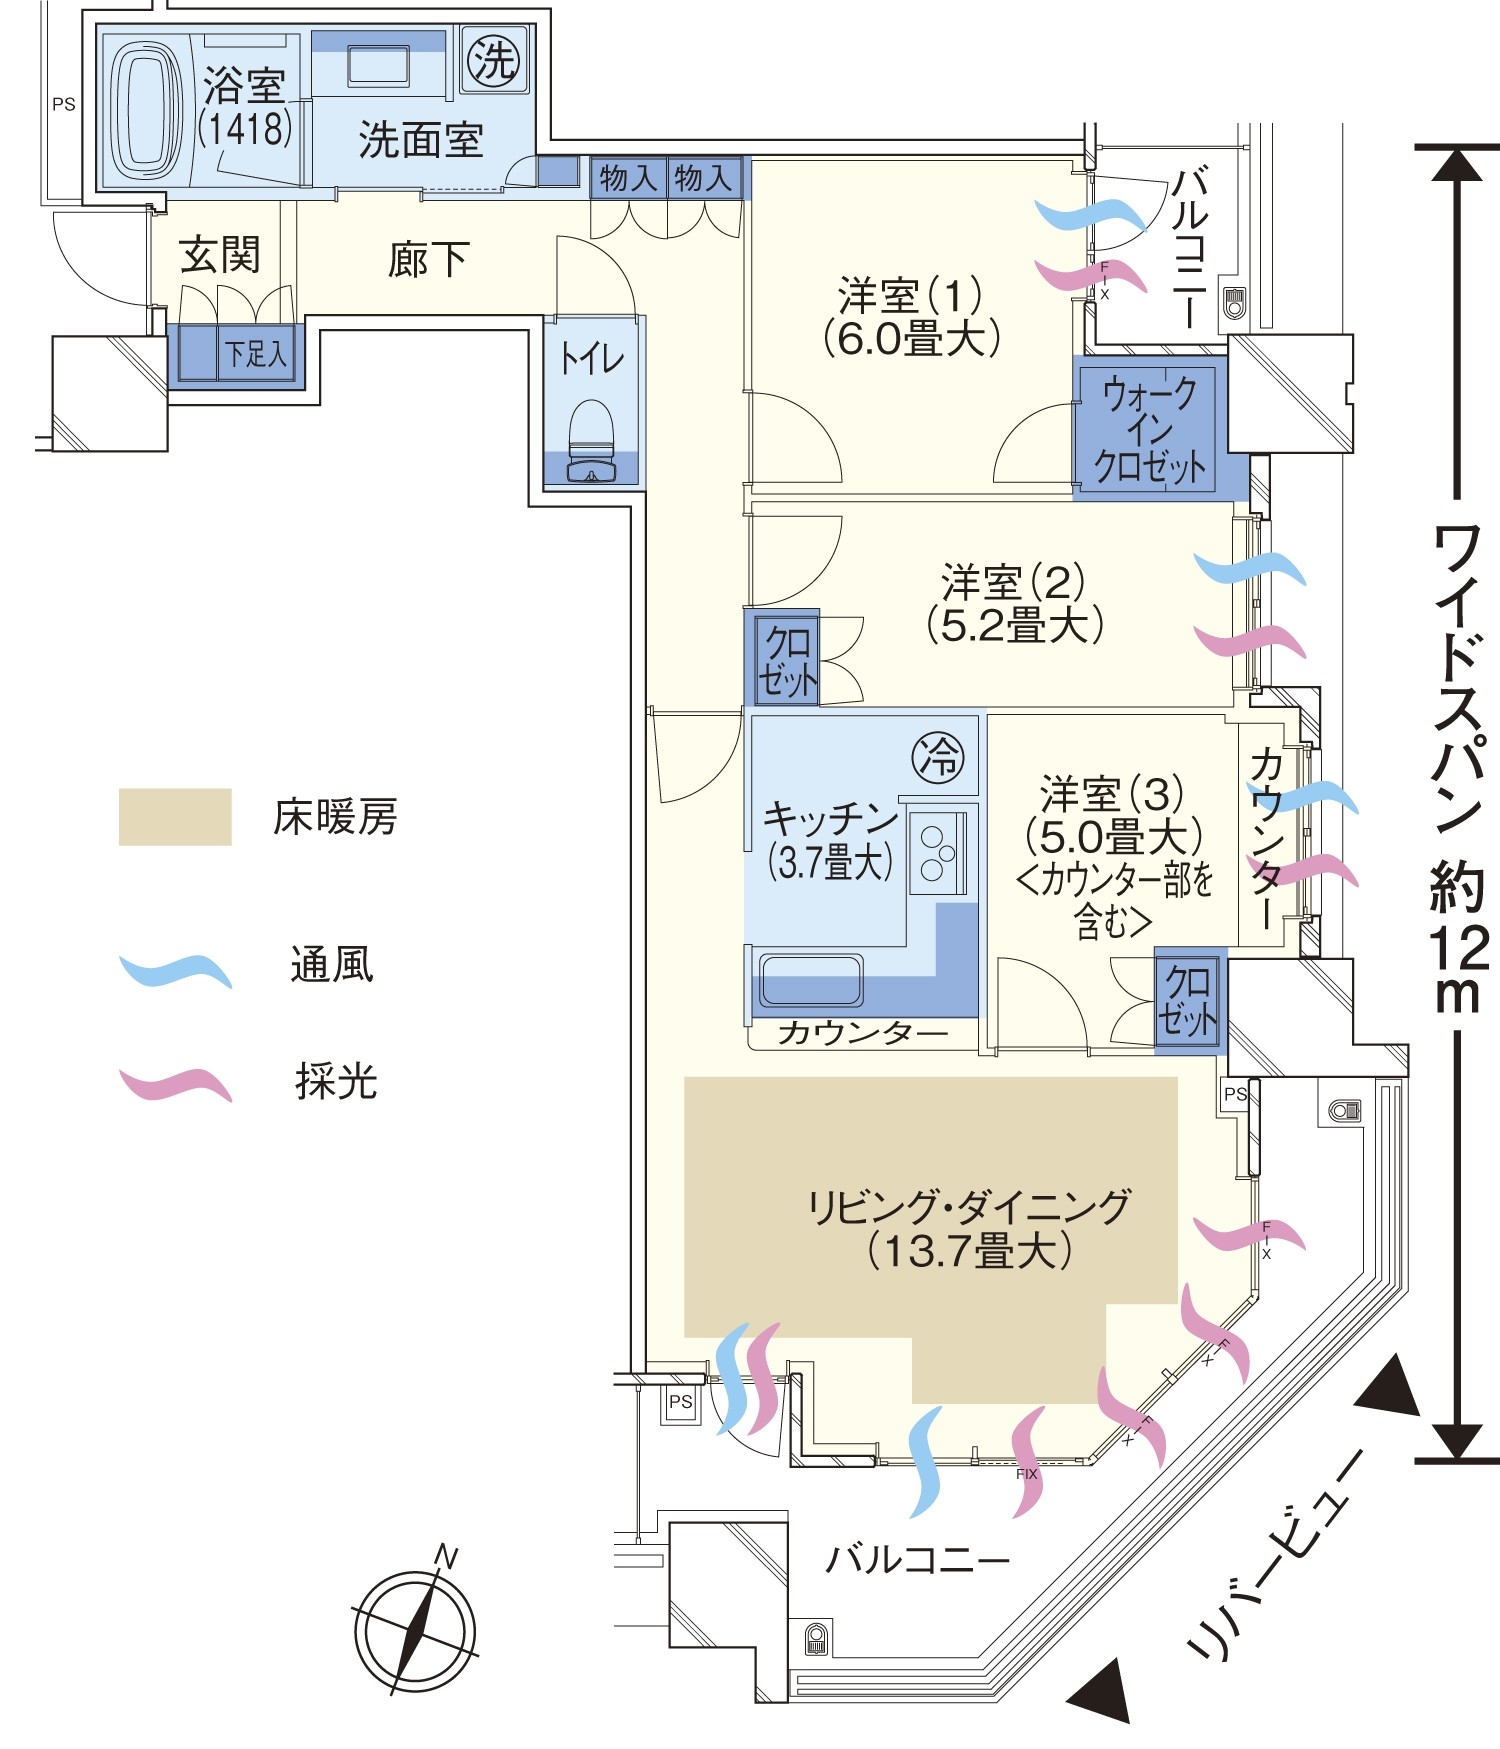 Building structure.  ■ 75J type ・ 3LDK + WIC value / 54,100,000 yen [19th floor] Occupied area / 78.91 sq m  Balcony area / 15.04 sq m  ※ WIC = walk-in closet